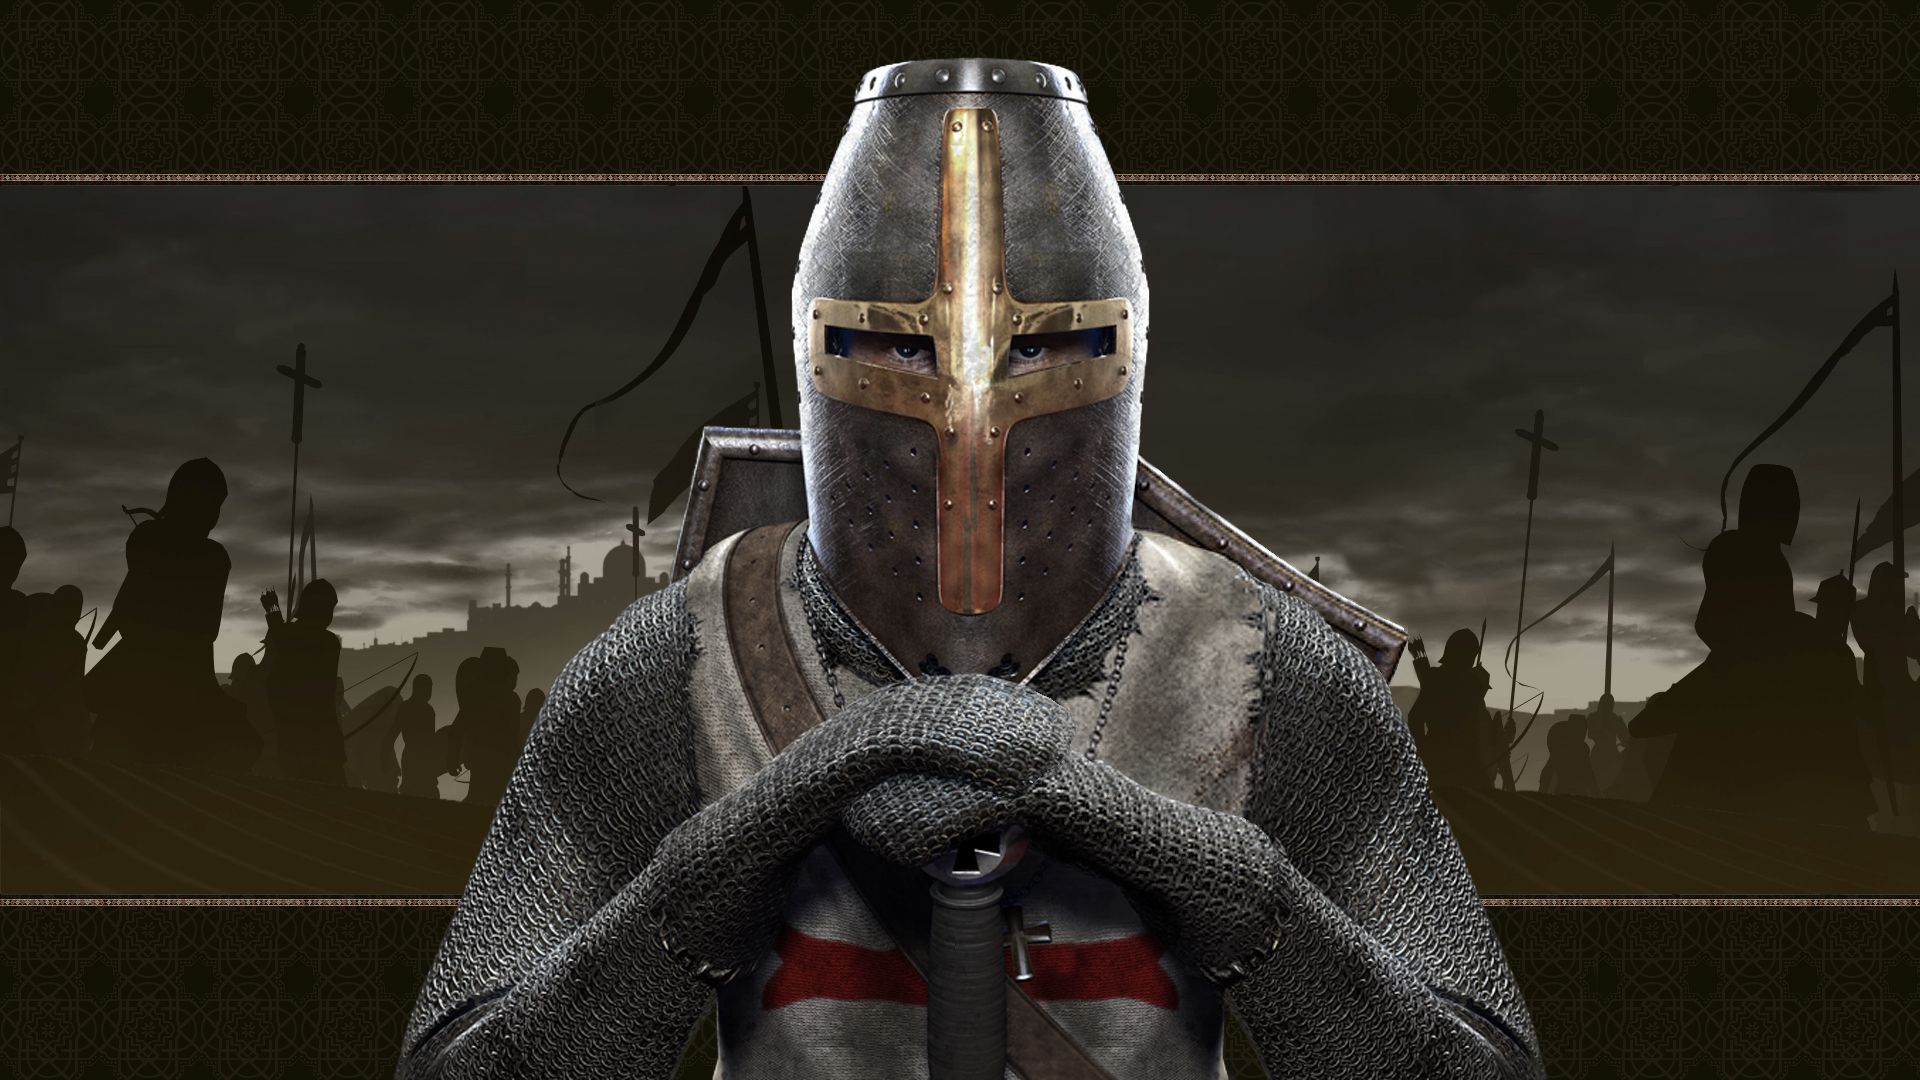 Crusader Knight Computer Wallpapers, Desktop Backgrounds ...